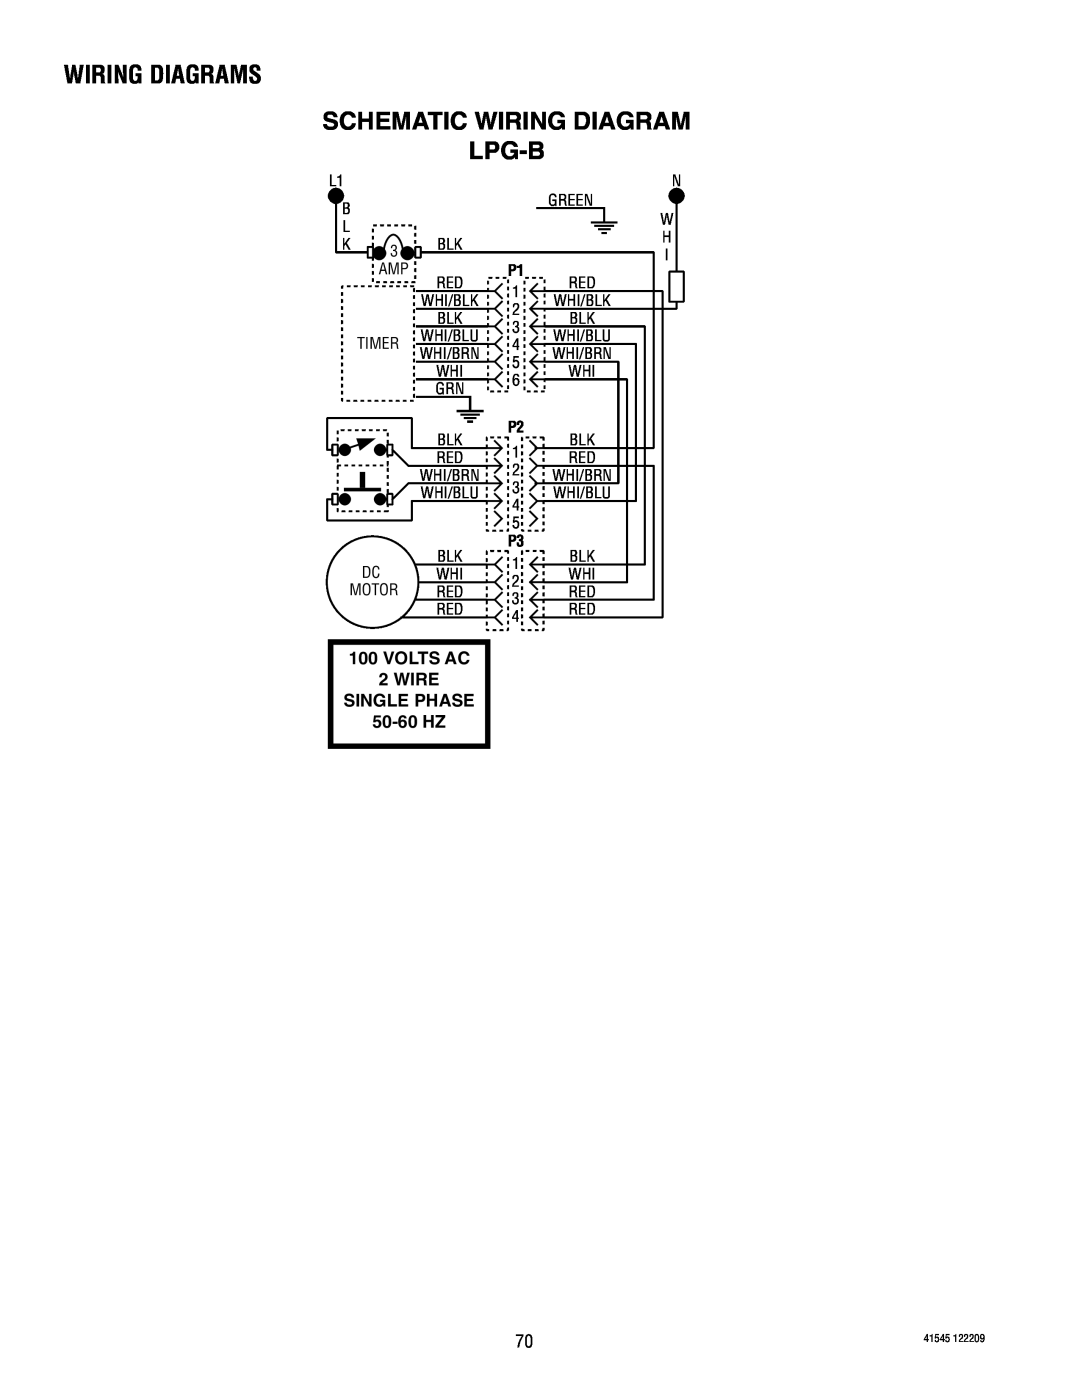 Bunn G1, LPG-2, G9WD, G9-2T DBC, FPG Wiring Diagrams Schematic Wiring Diagram Lpg-B, VOLTS AC 2 WIRE SINGLE PHASE 50-60 HZ 